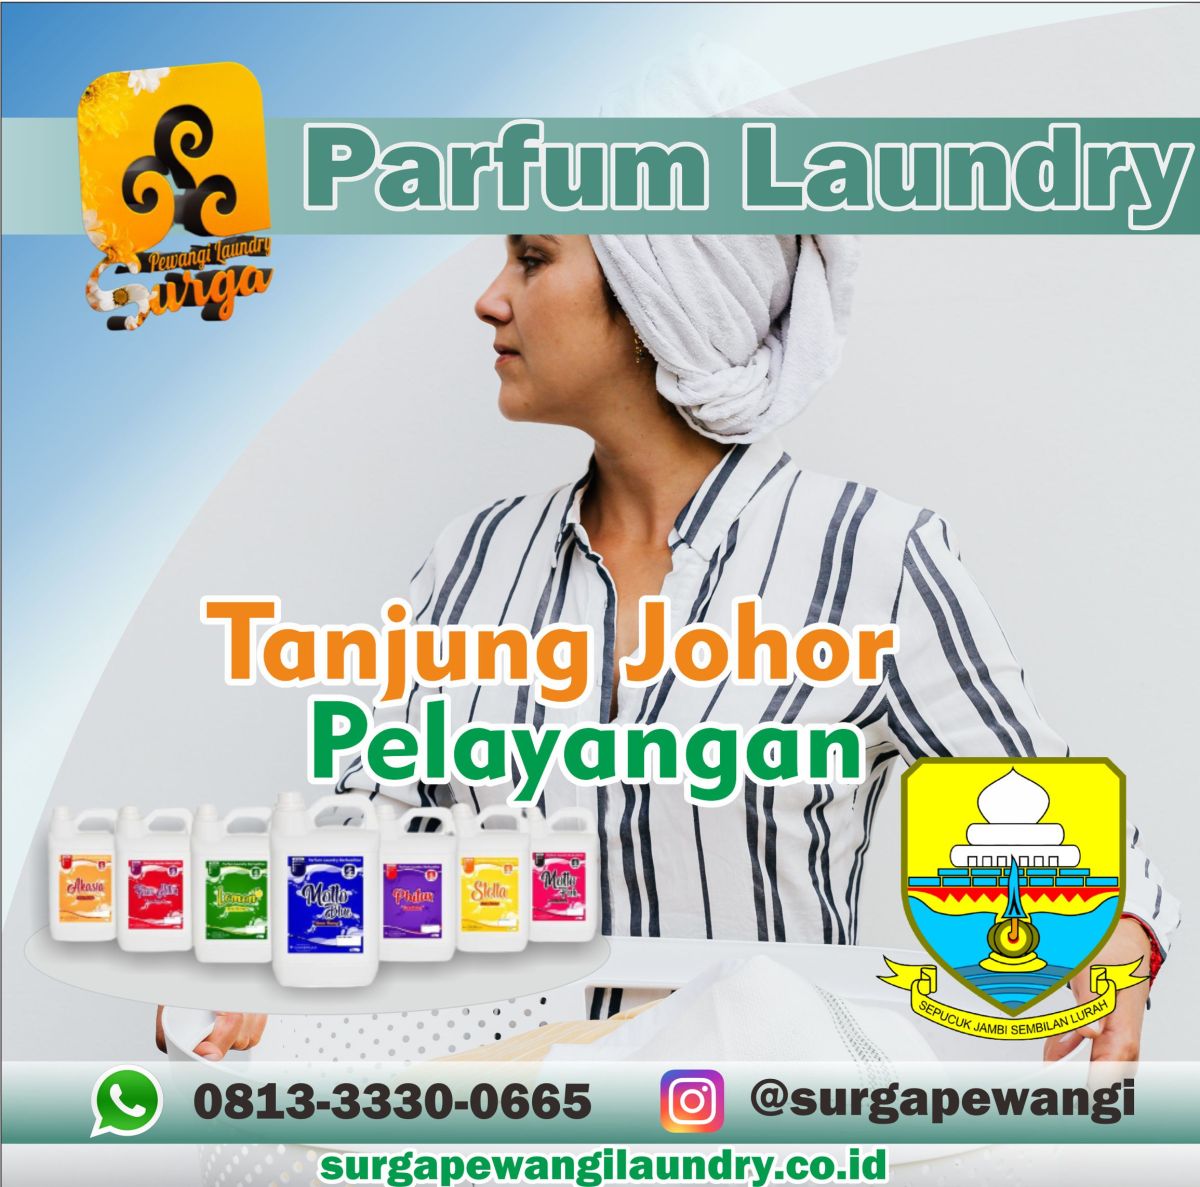 Parfum Laundry Tanjung Johor, Pelayangan